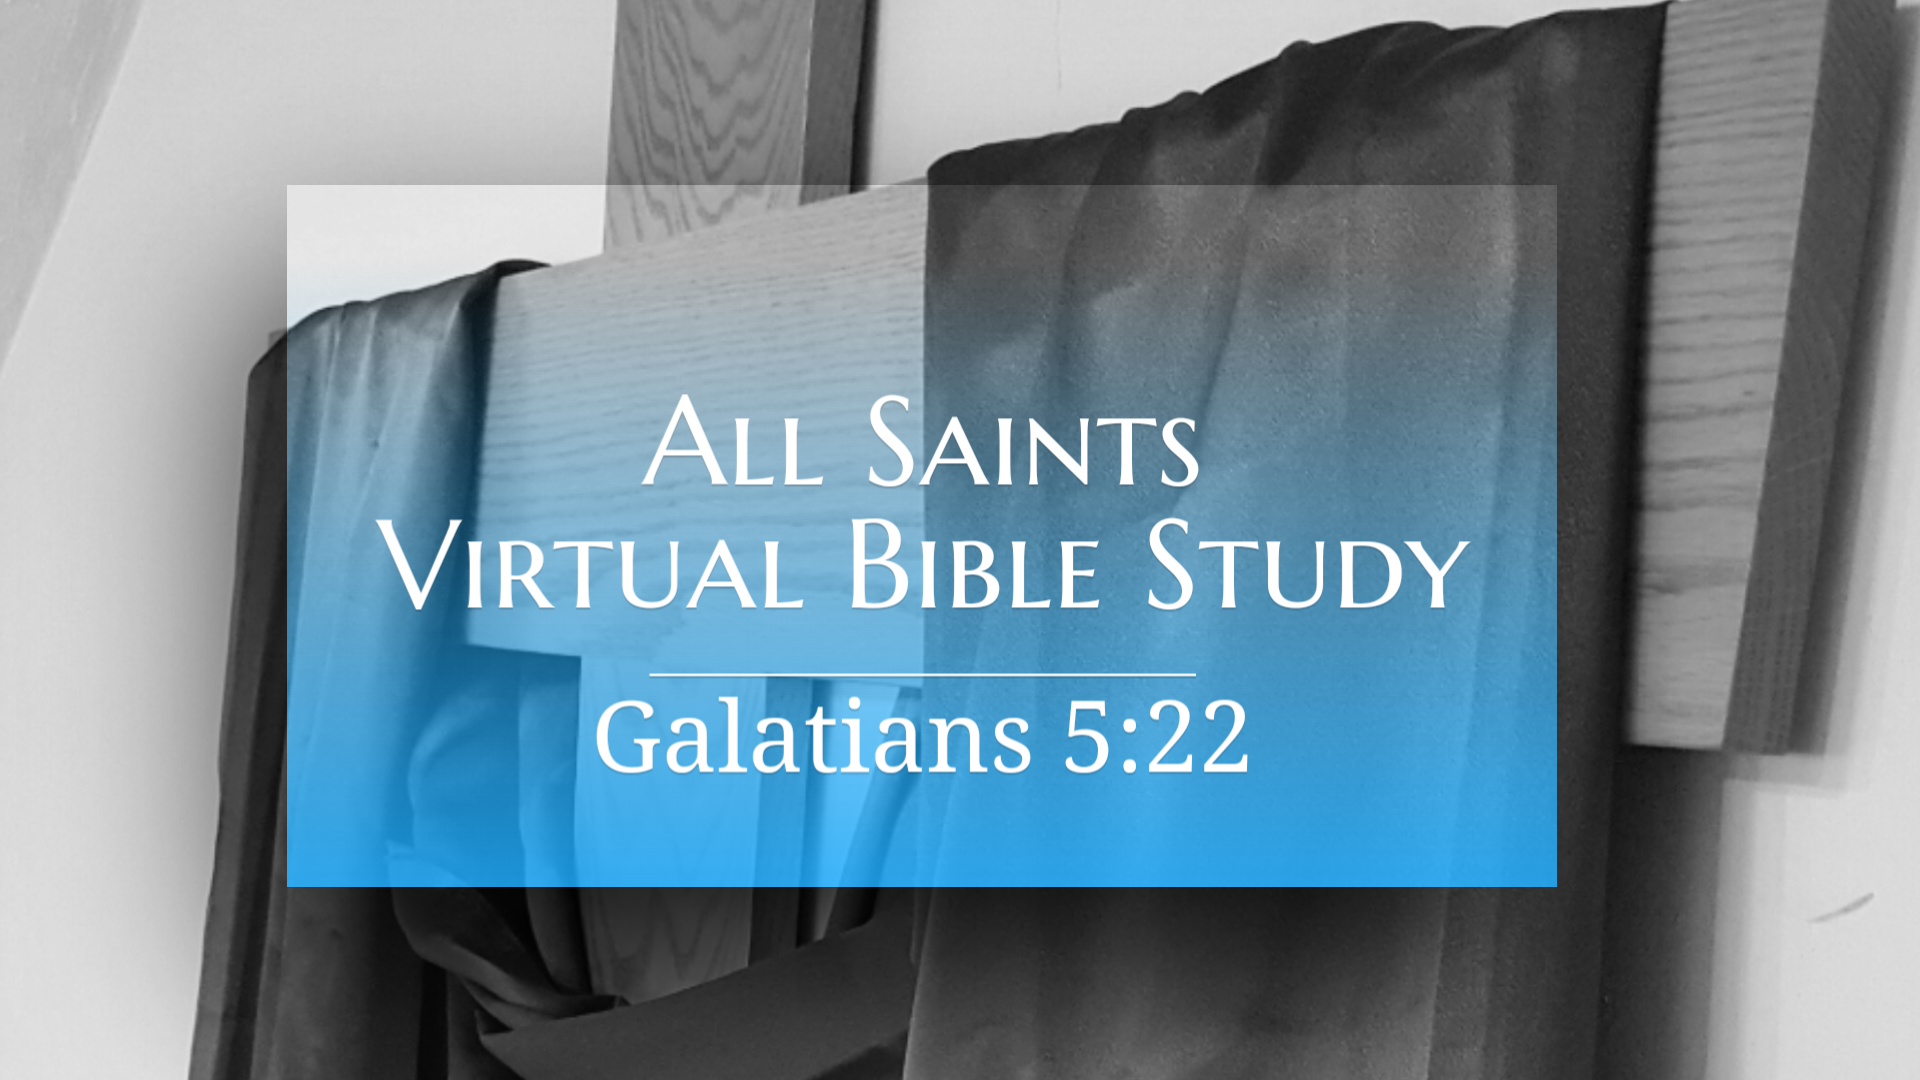 All Saints Virtual Bible Study - Galatians 5:22